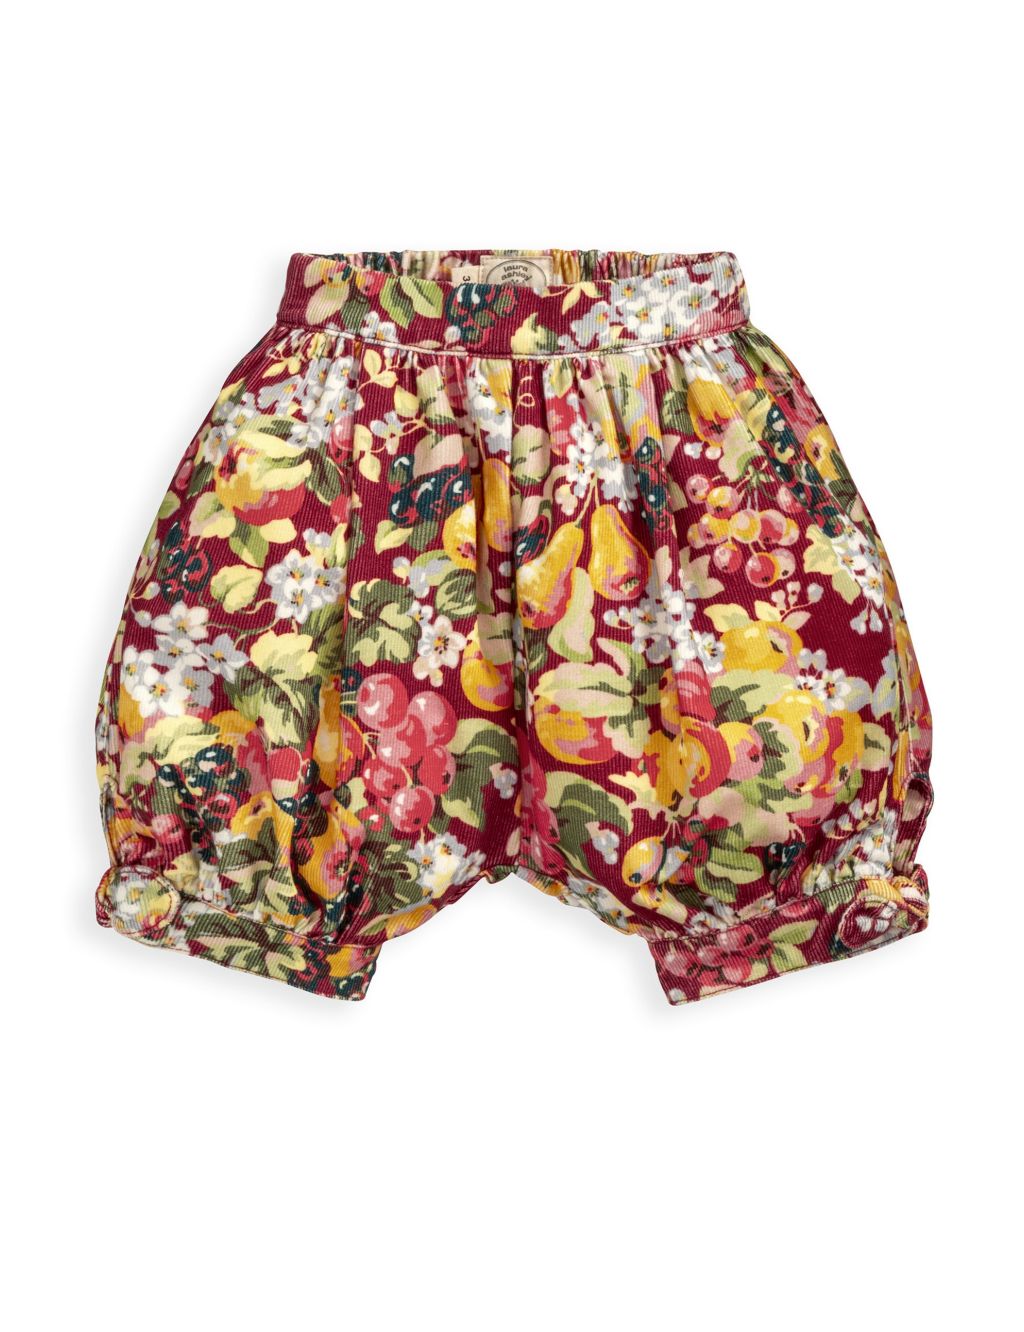 Laura Ashley Fruit Print Trouser (0-2 Yrs) image 1